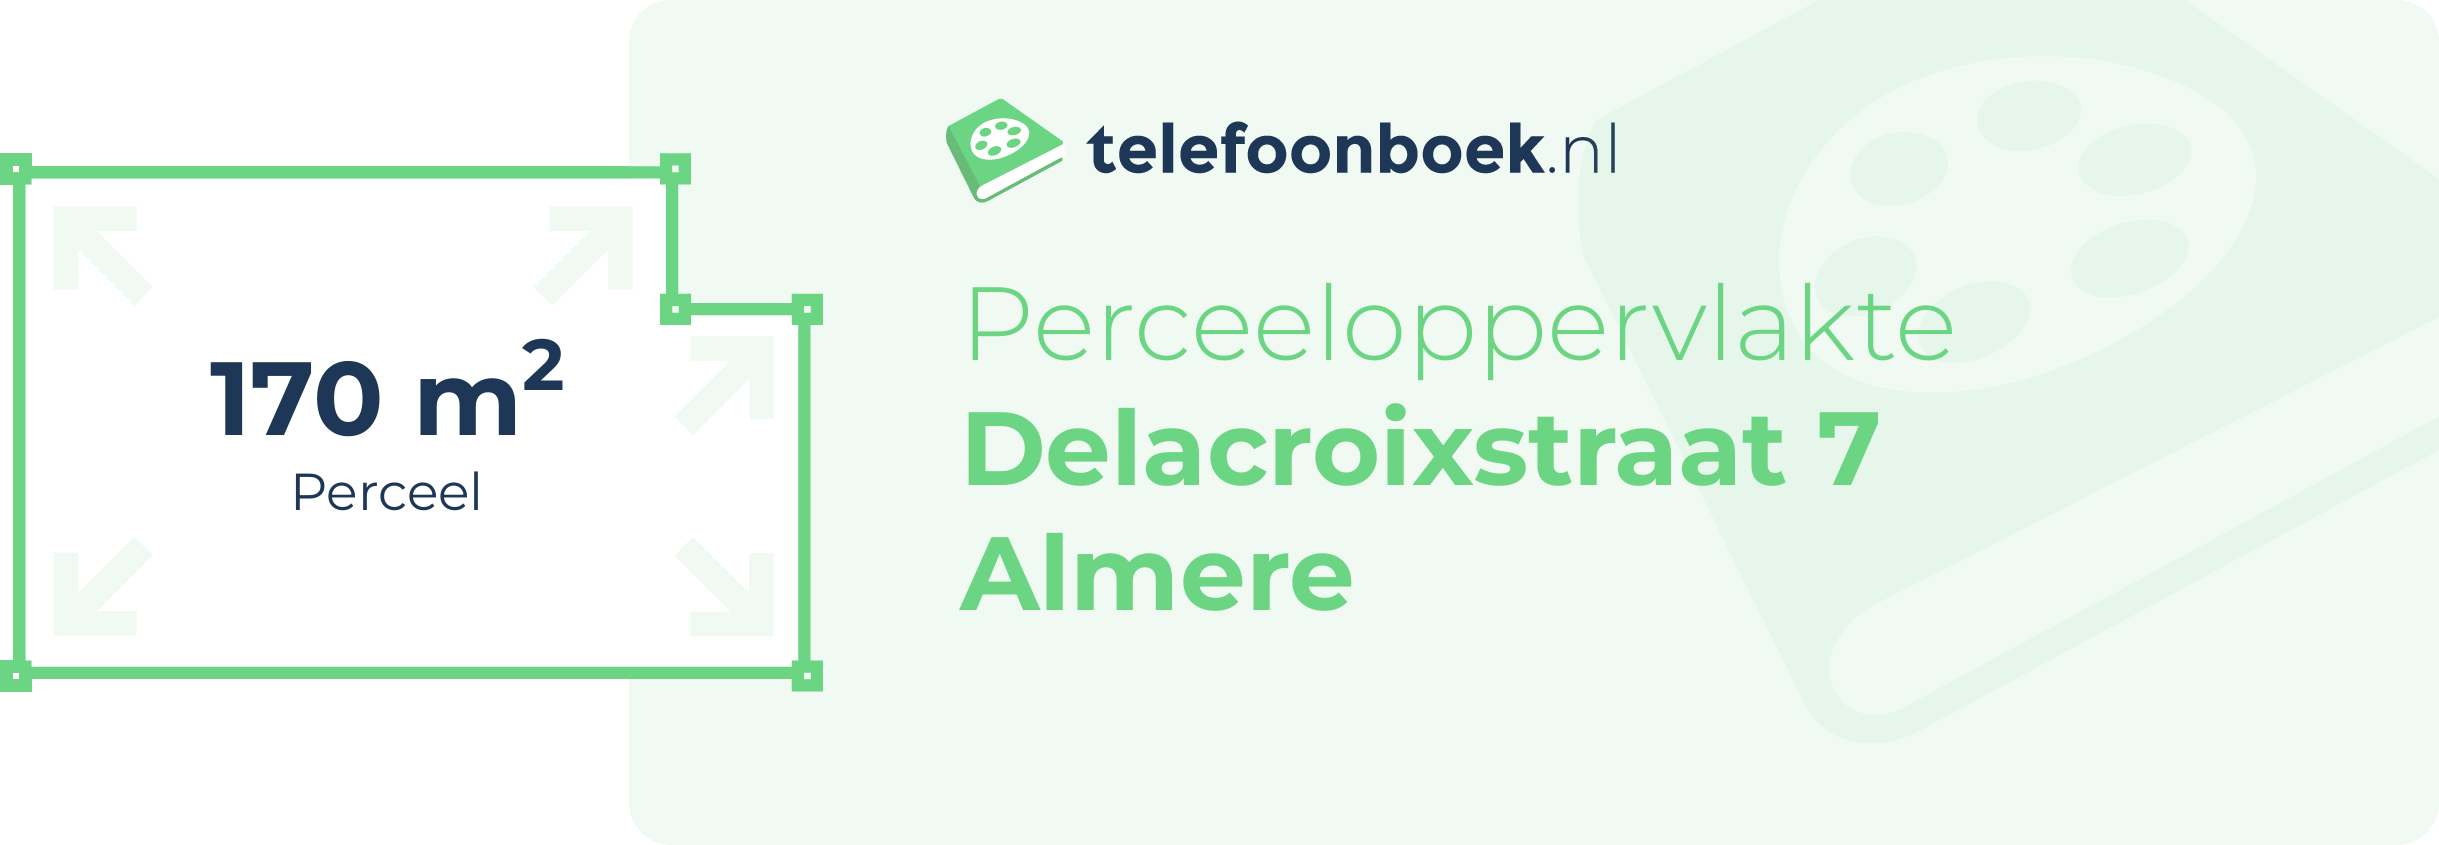 Perceeloppervlakte Delacroixstraat 7 Almere